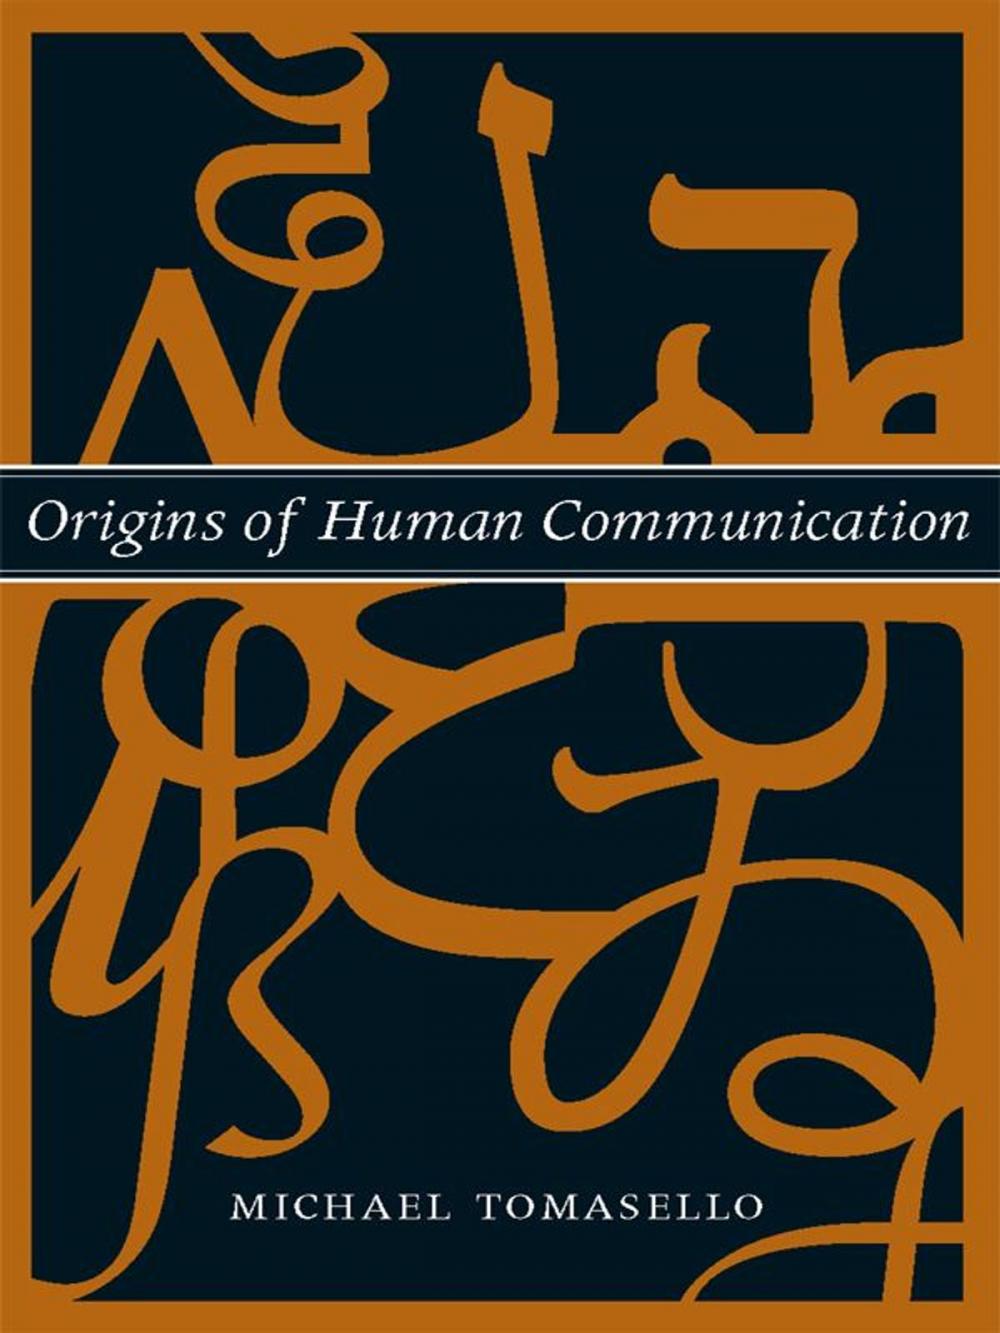 Big bigCover of Origins of Human Communication